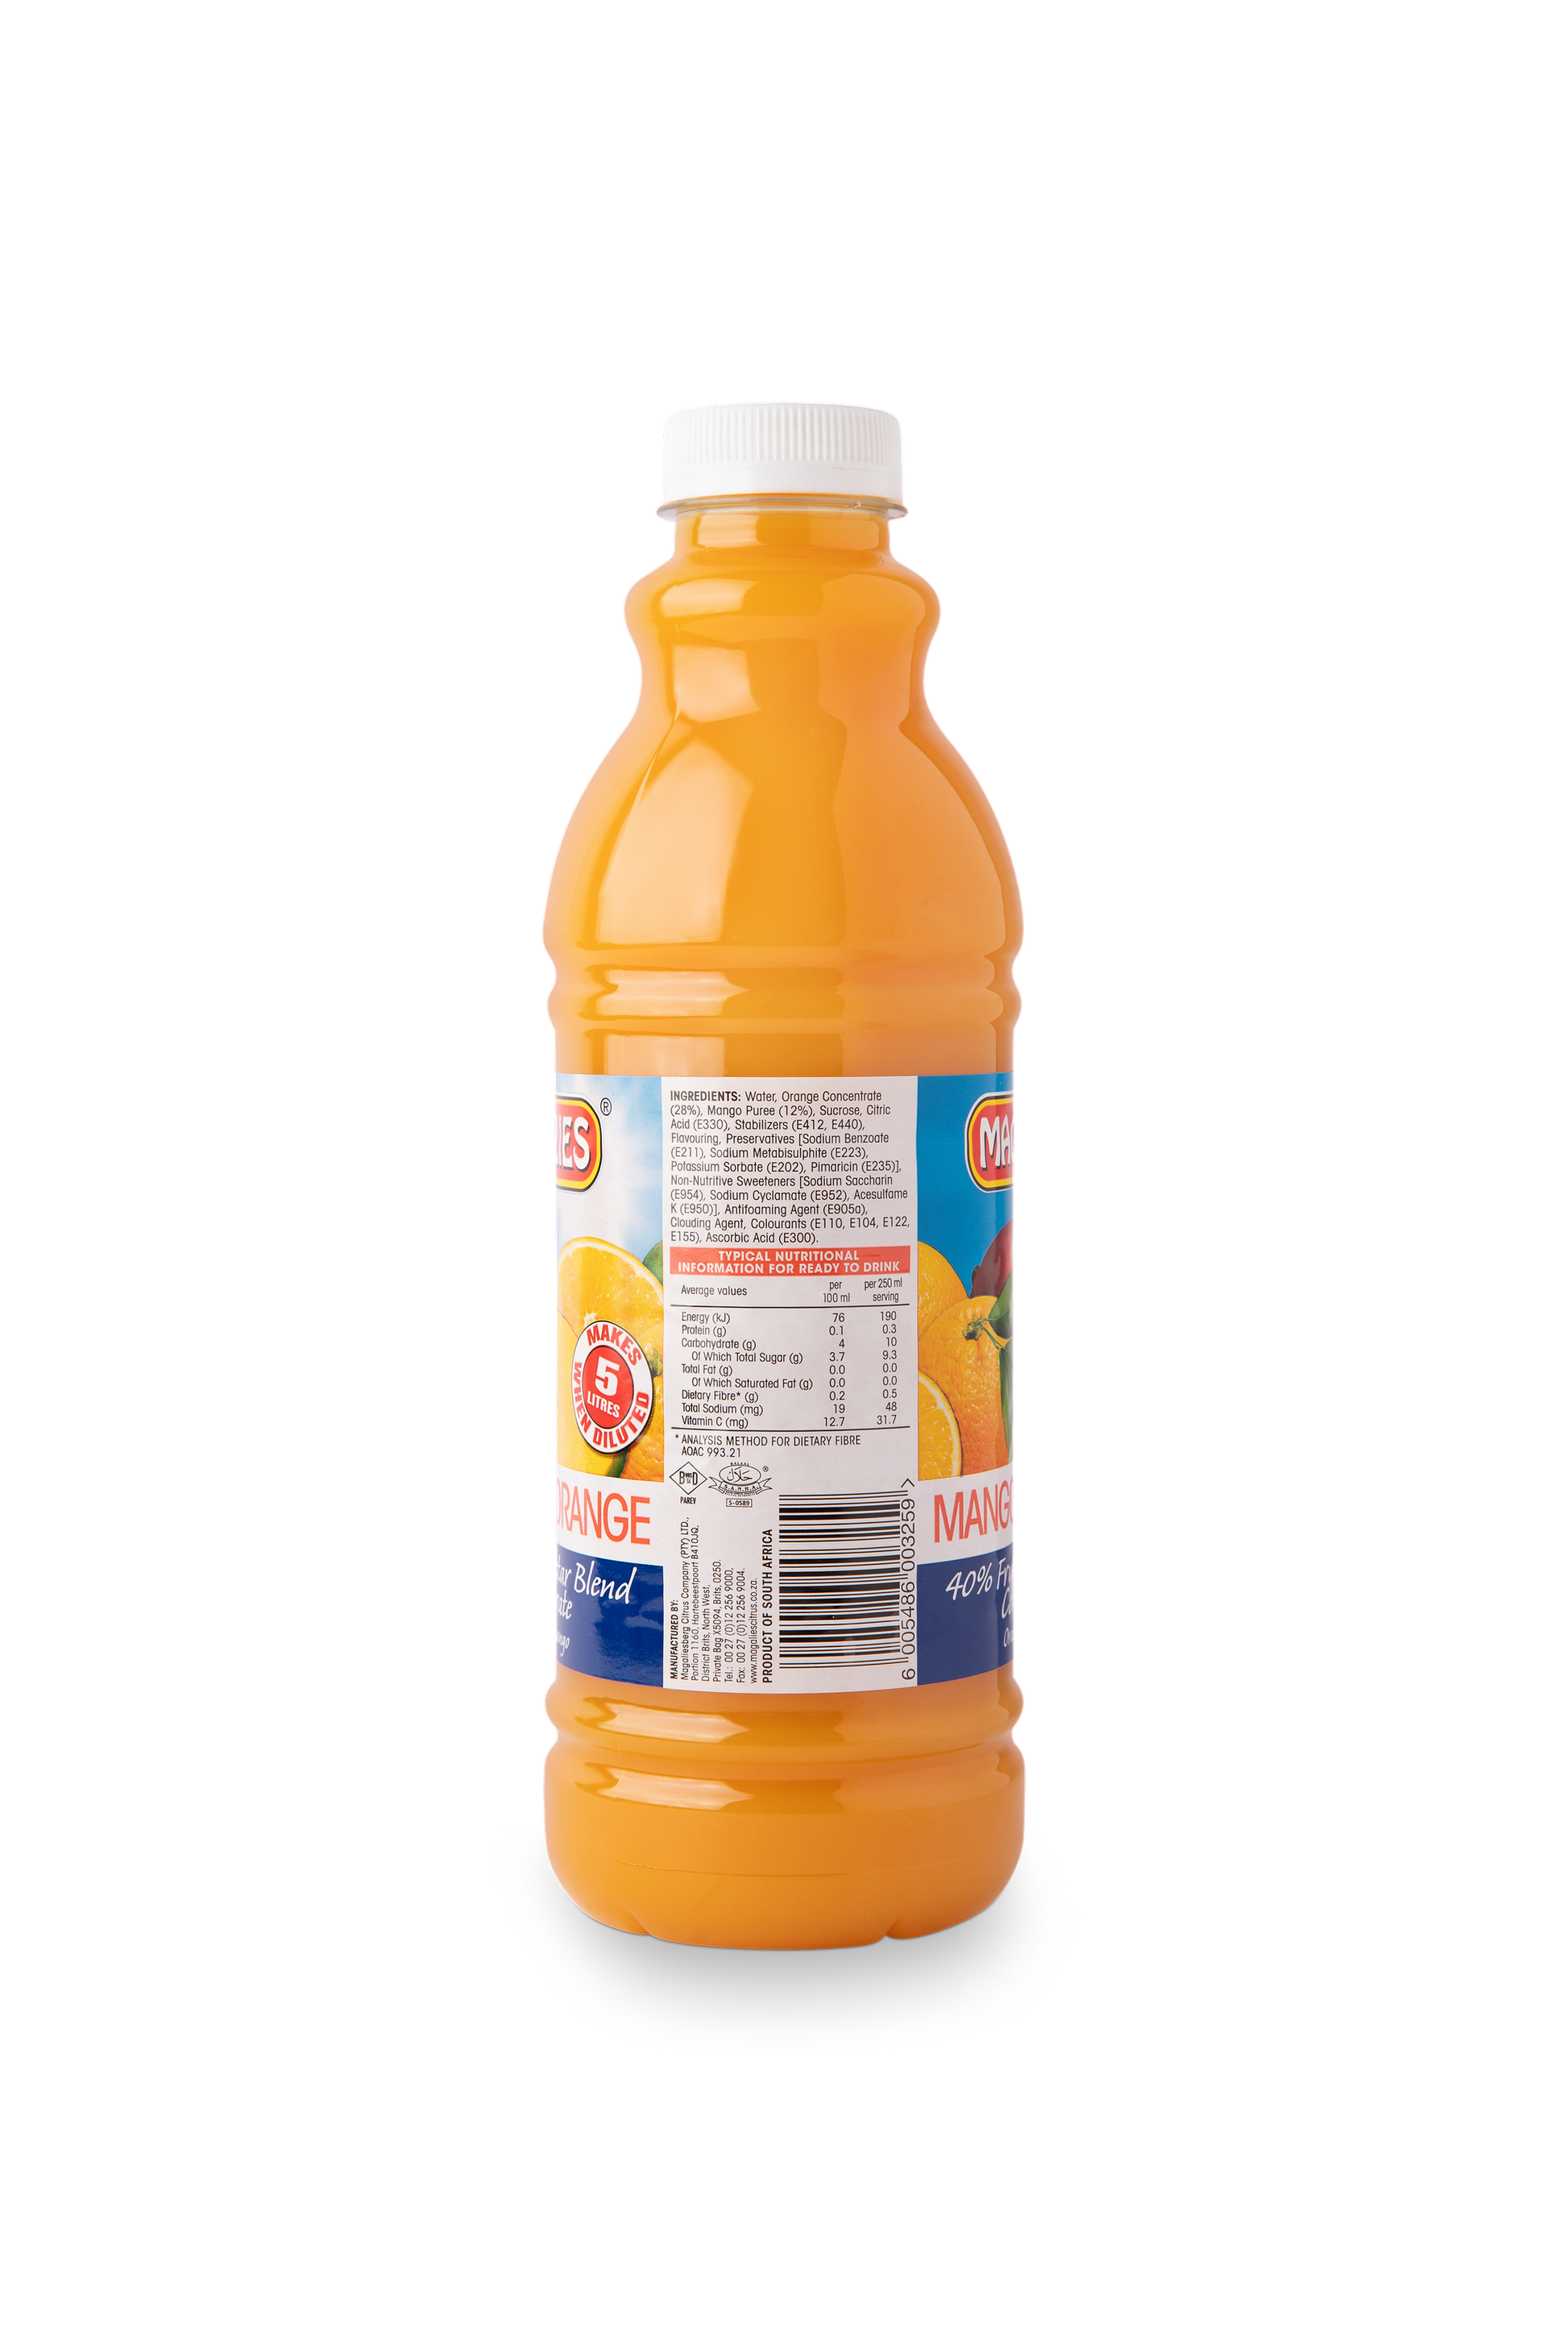 Magalies 1 litre Mango & Orange 40% 1+4 fruit nectar concentrate